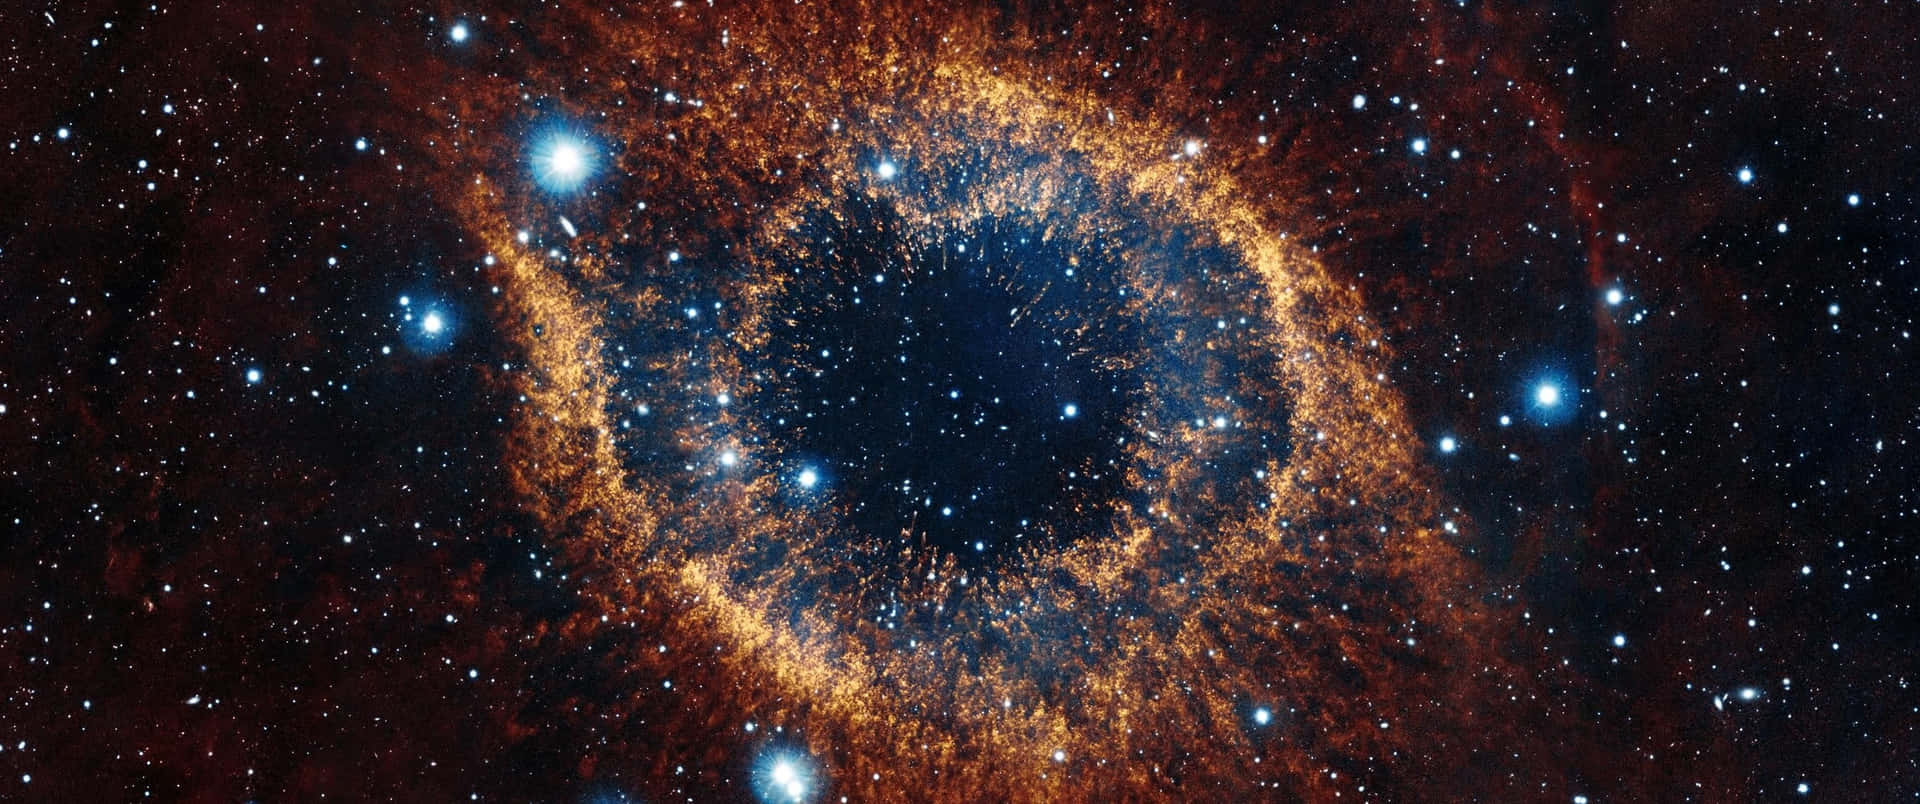 3440x1440 Space Colorful Helix Nebula Wallpaper